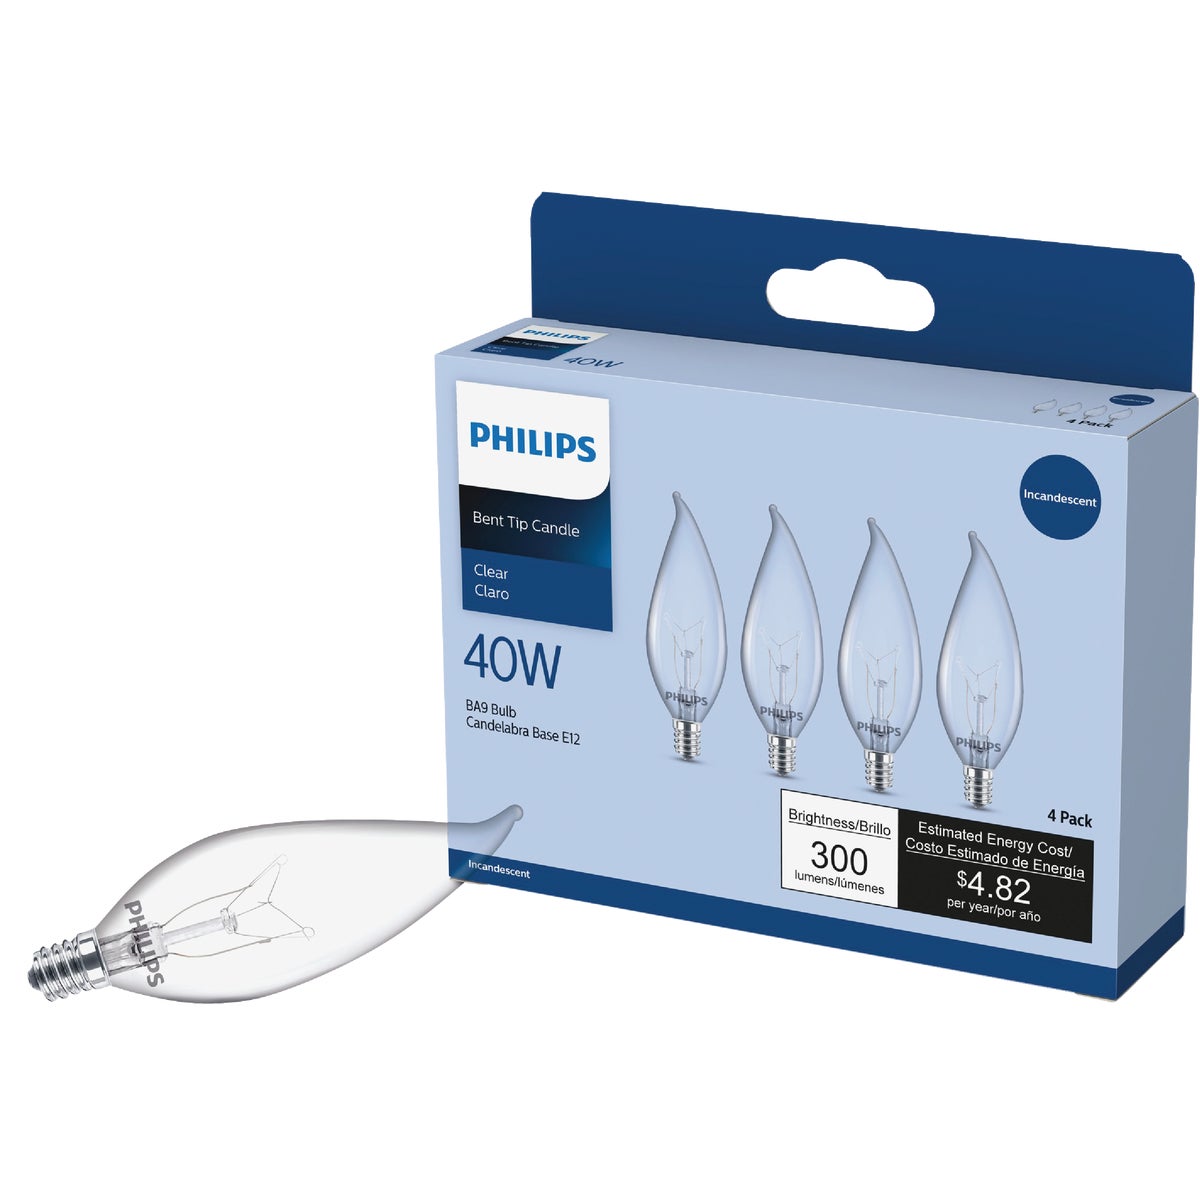 Philips DuraMax 40W Clear Candelabra BA9 Incandescent Bent Tip Light Bulb (4-Pack)